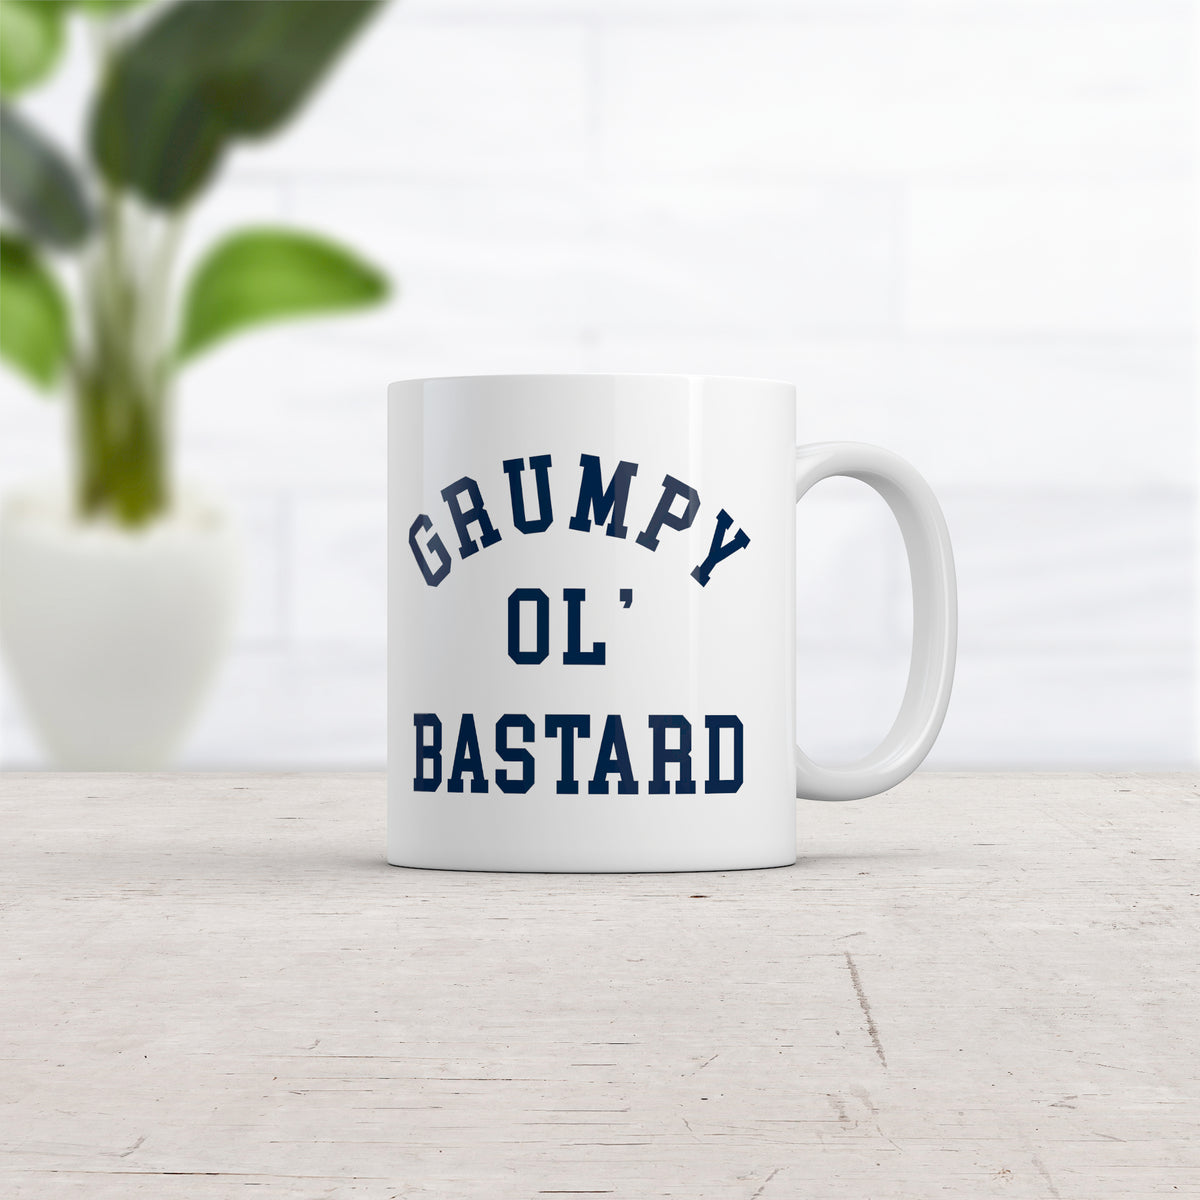 Grumpy Ol Bastard Mug